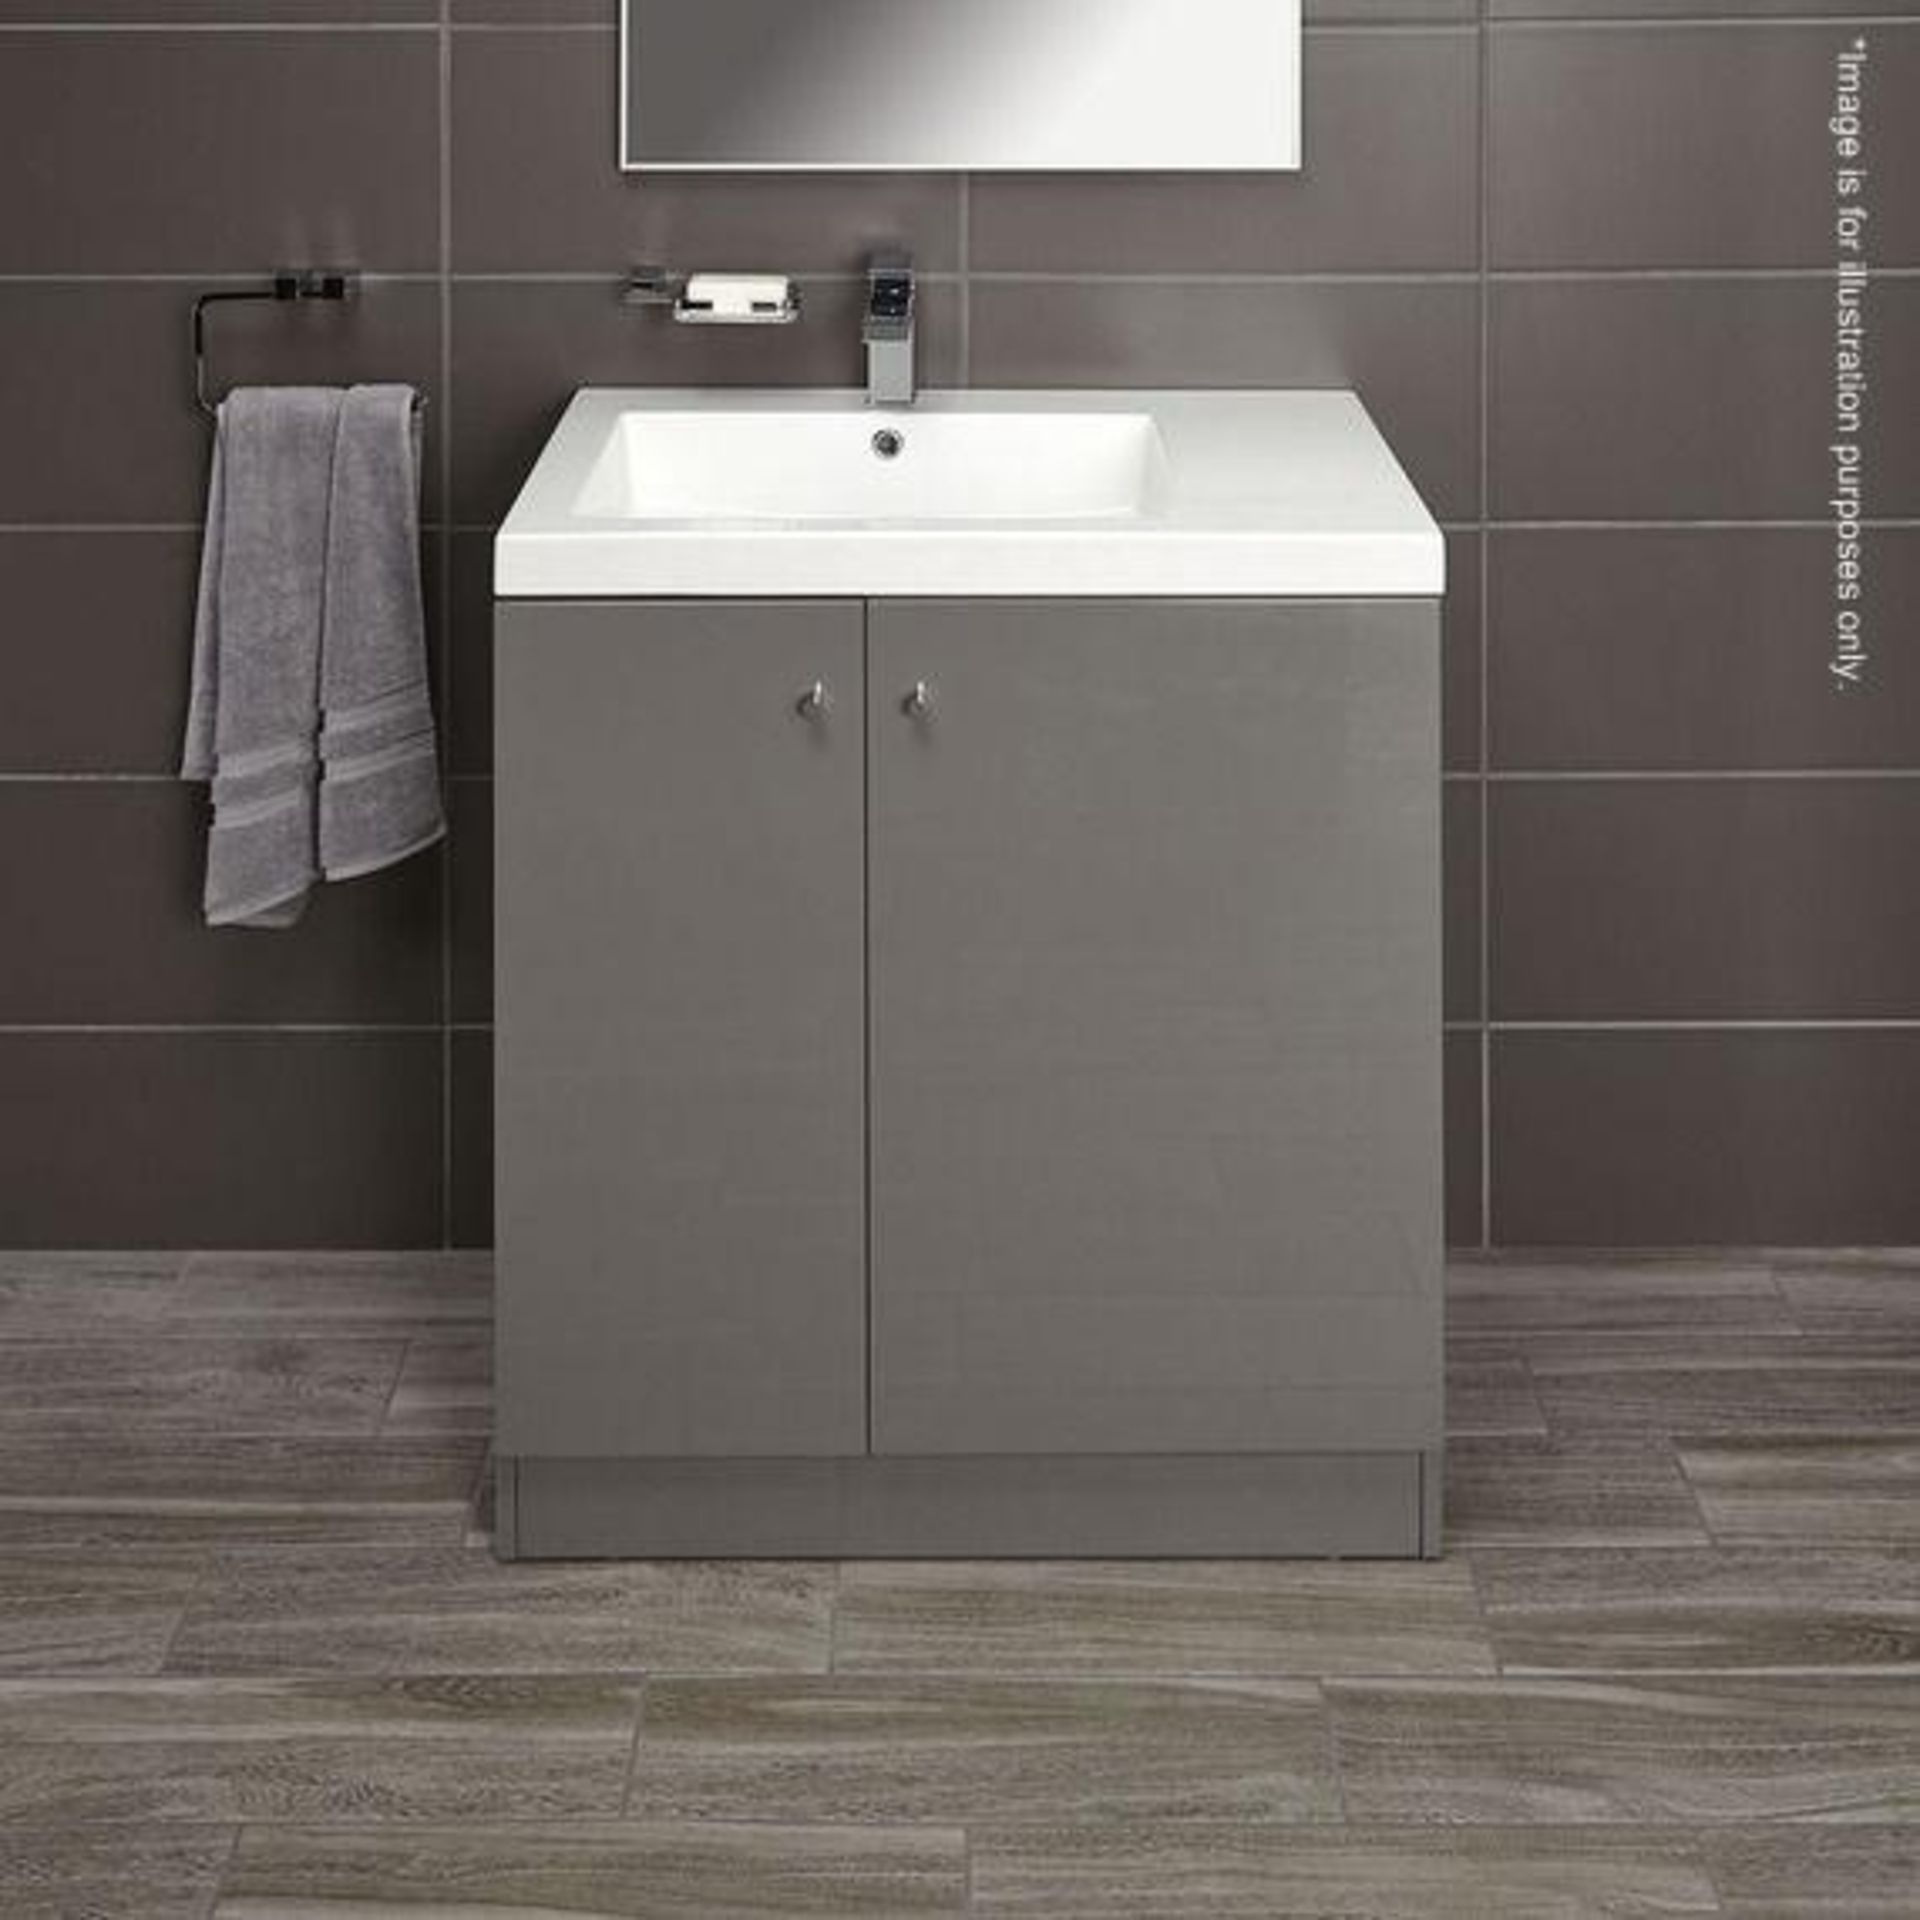 10 x Alpine Duo 750 Floorstanding Vanity Units In Gloss Grey - Dimensions: H80 x W75 x D49.5cm - - Image 2 of 4